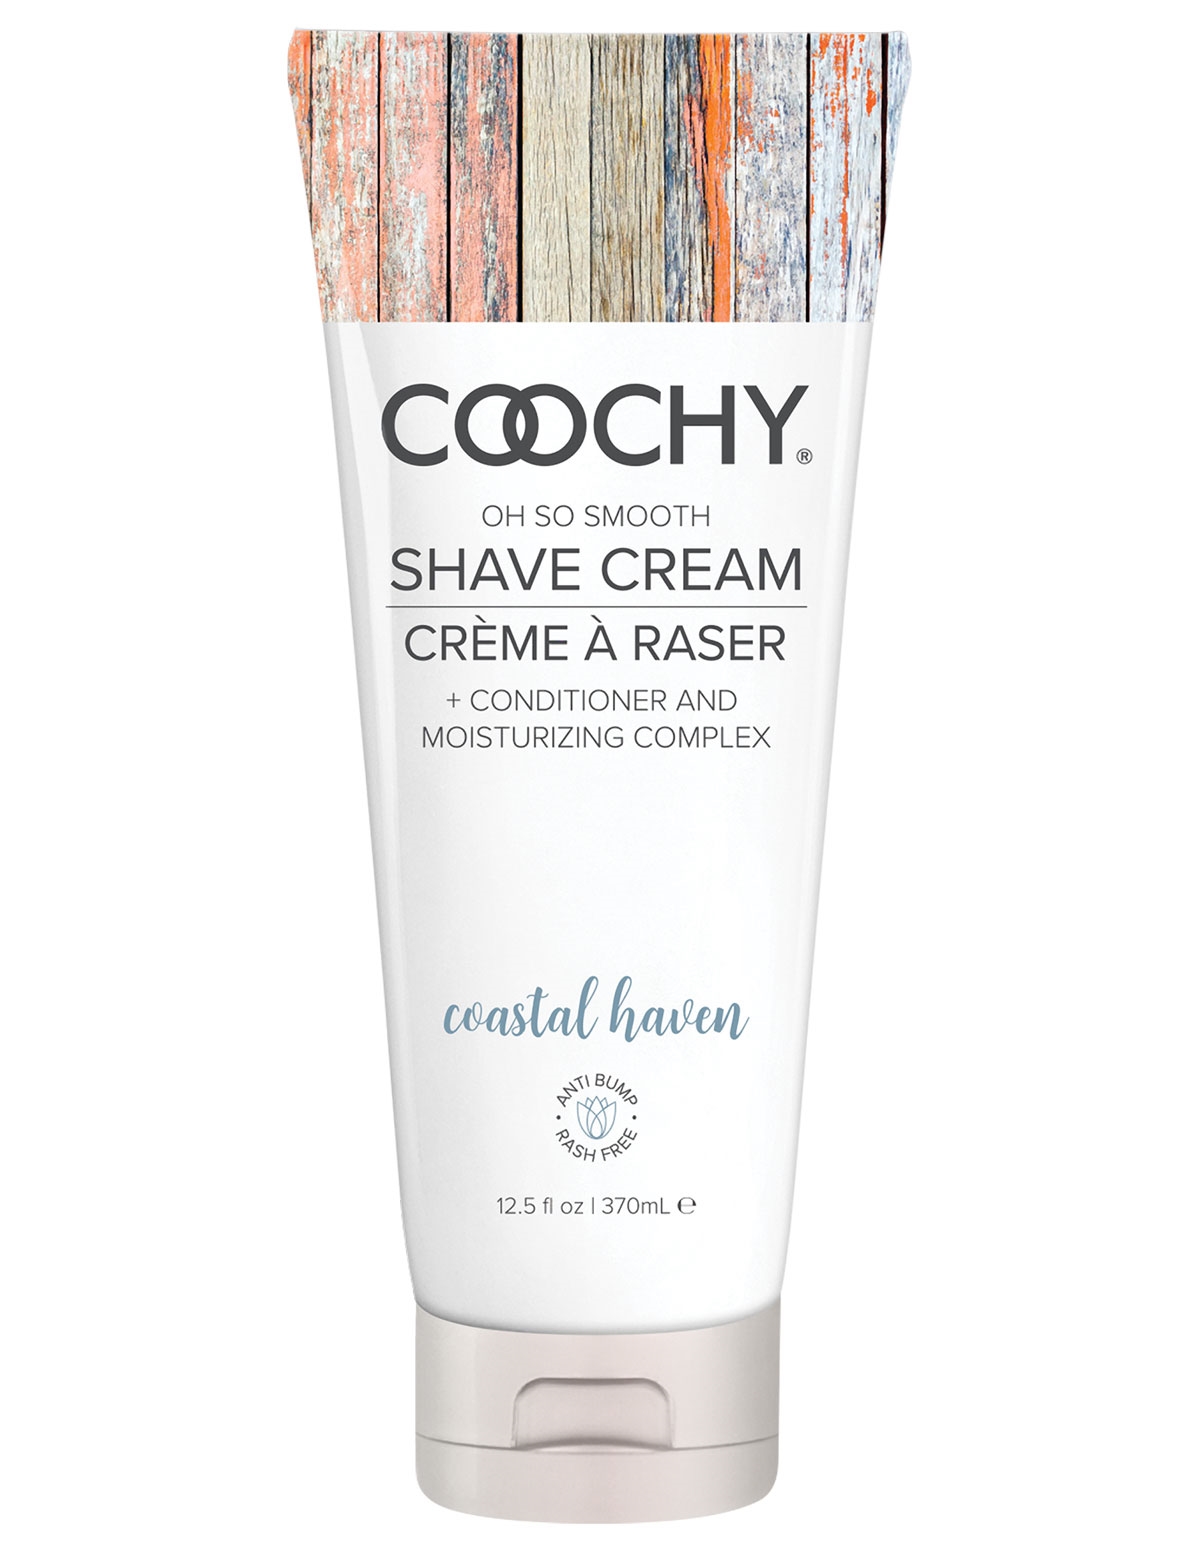 alternate image for Coochy Shave Cream - Coastal Haven